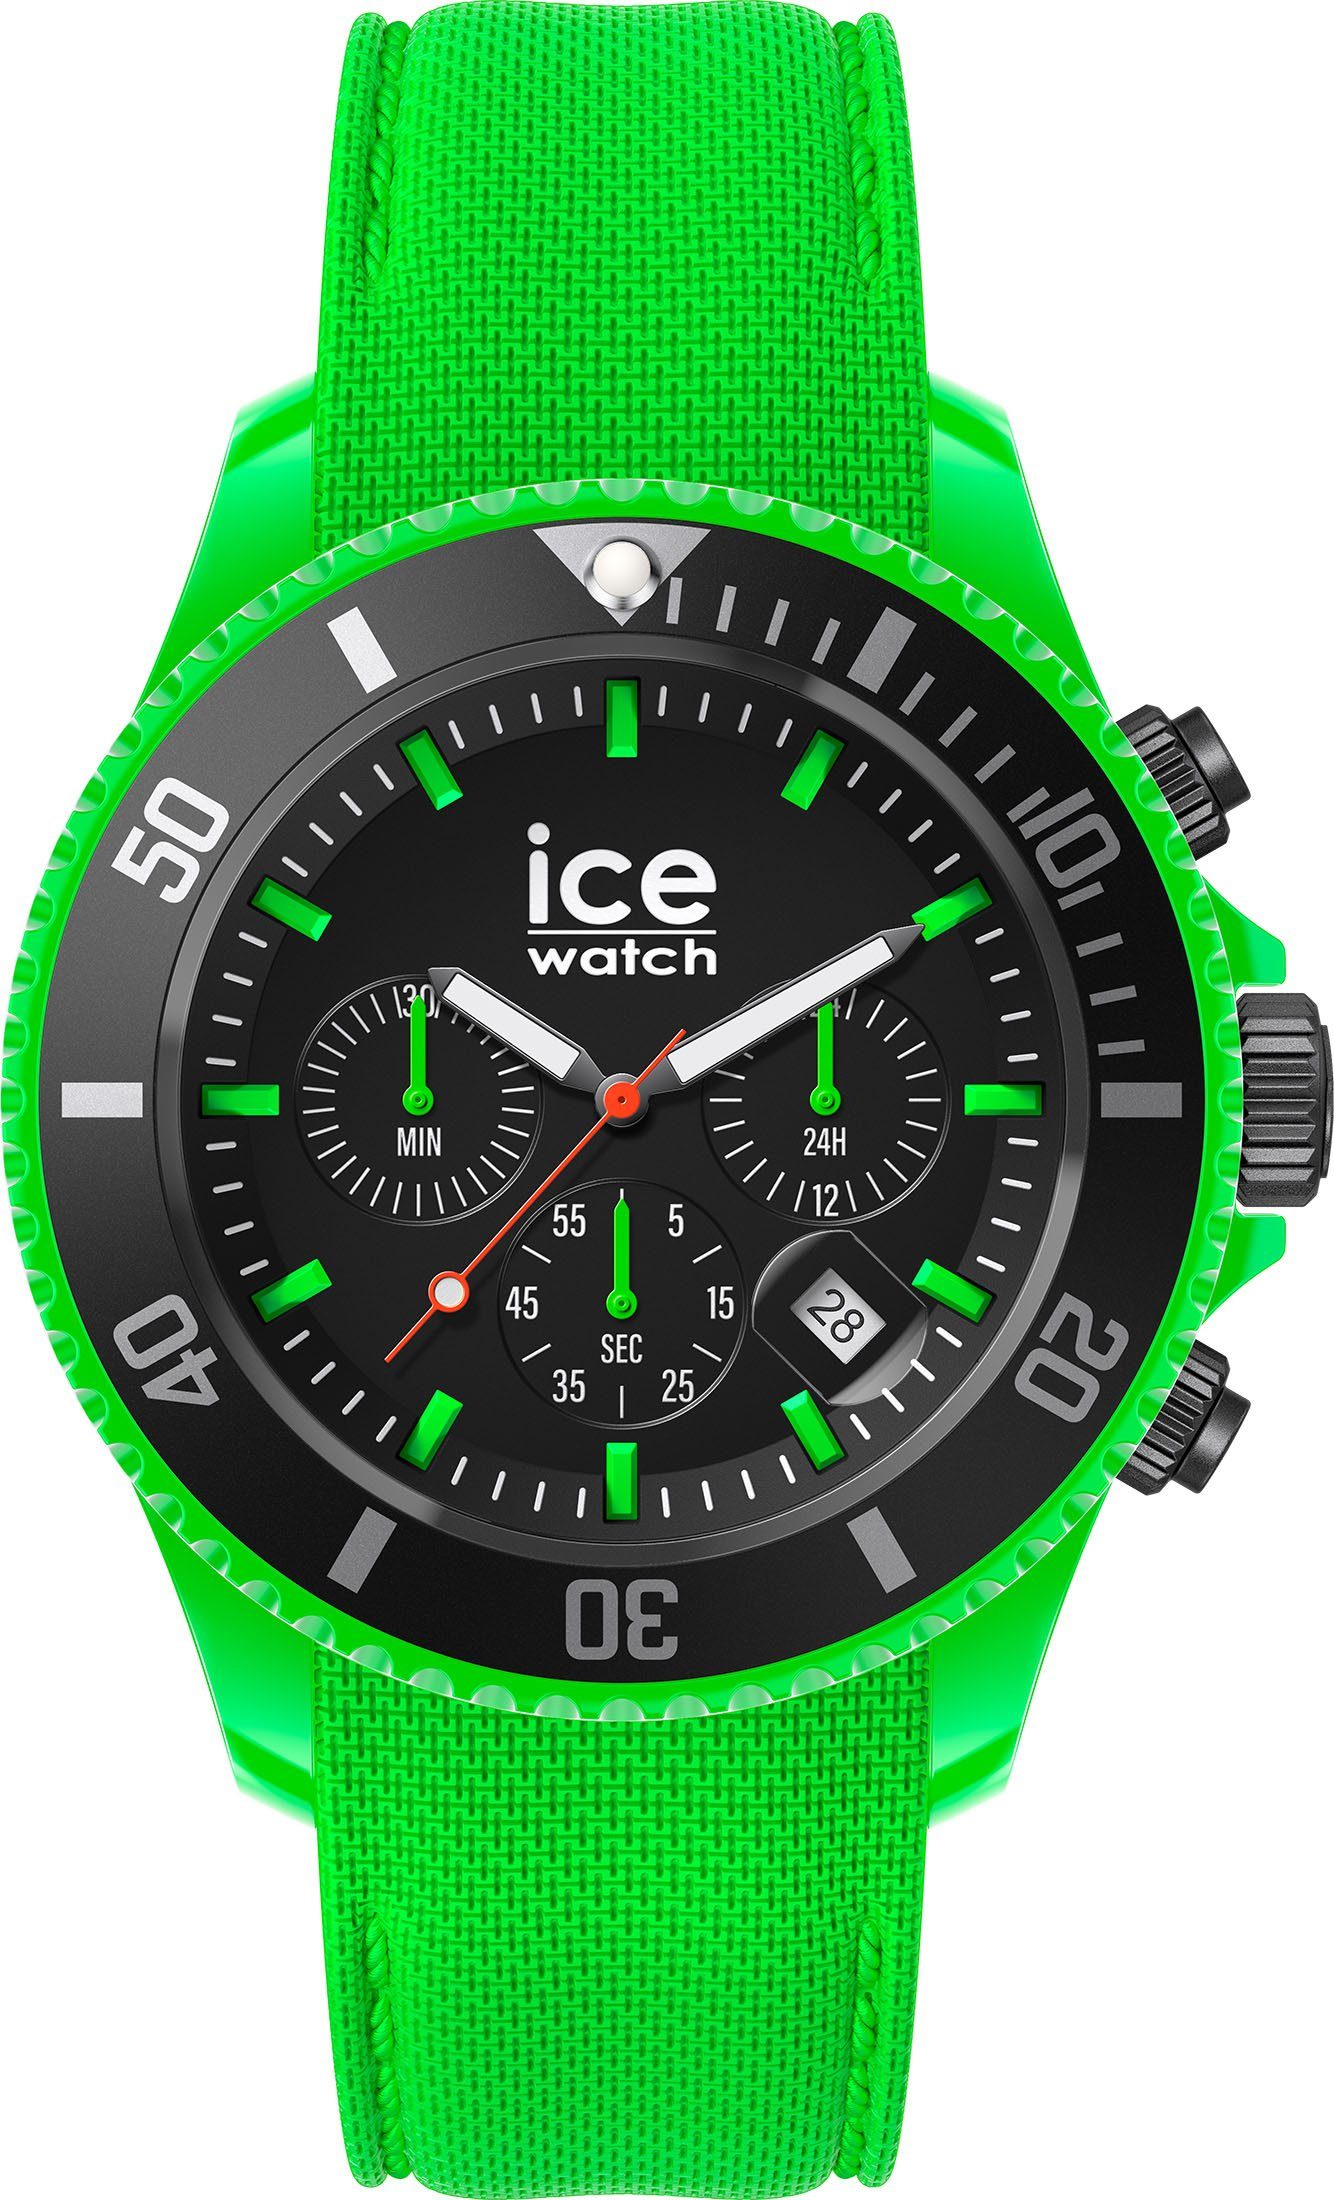 CH, chrono ice-watch Large - - grün - ICE Neon Chronograph 019839 green